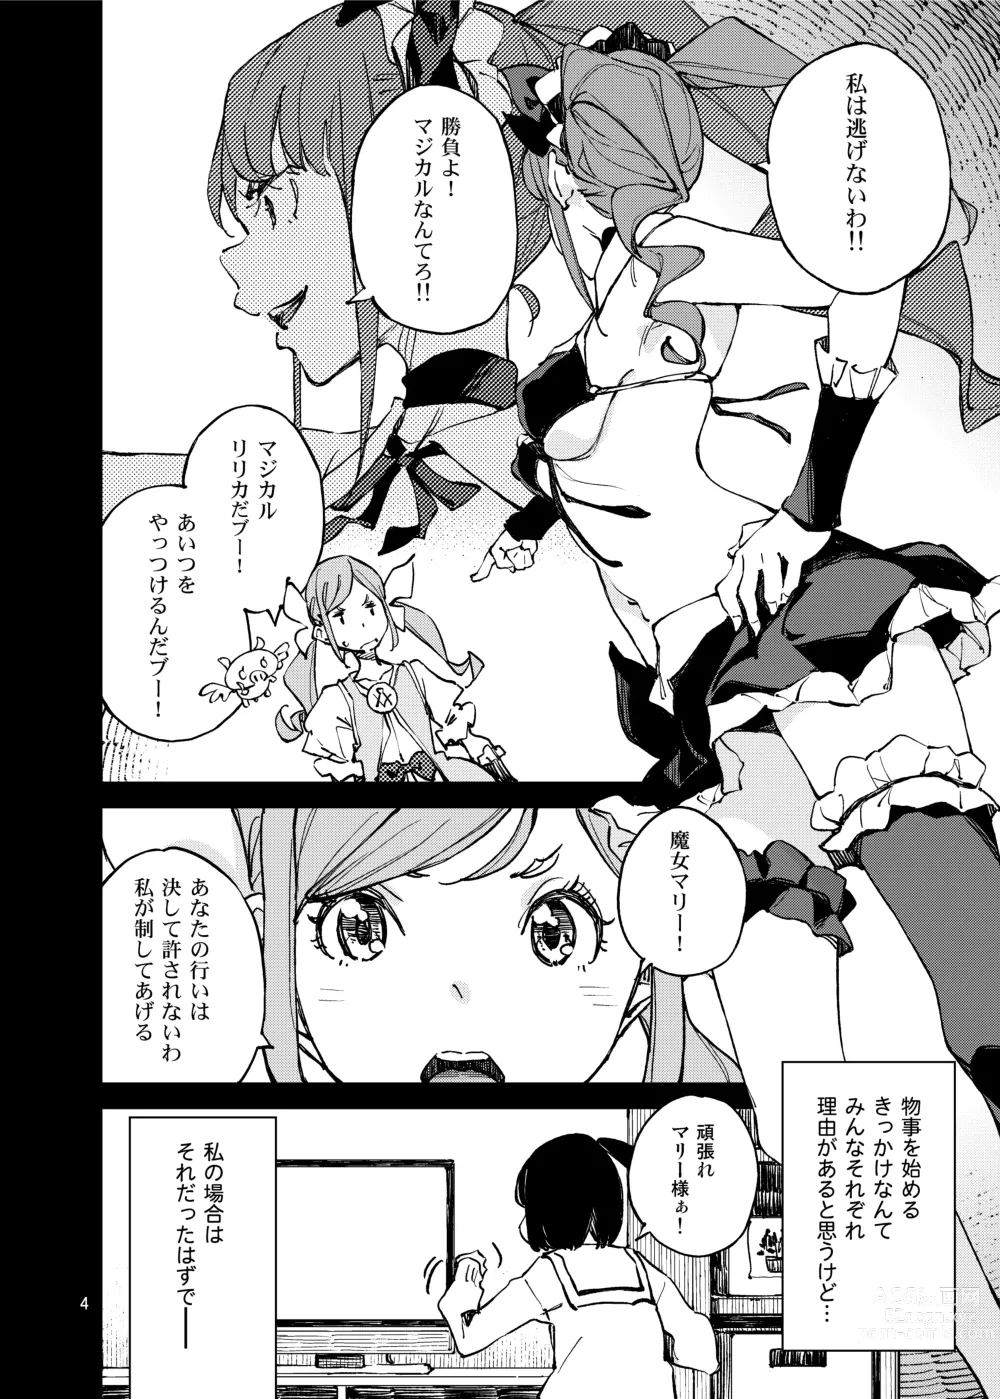 Page 4 of doujinshi Anata ni Naritakute